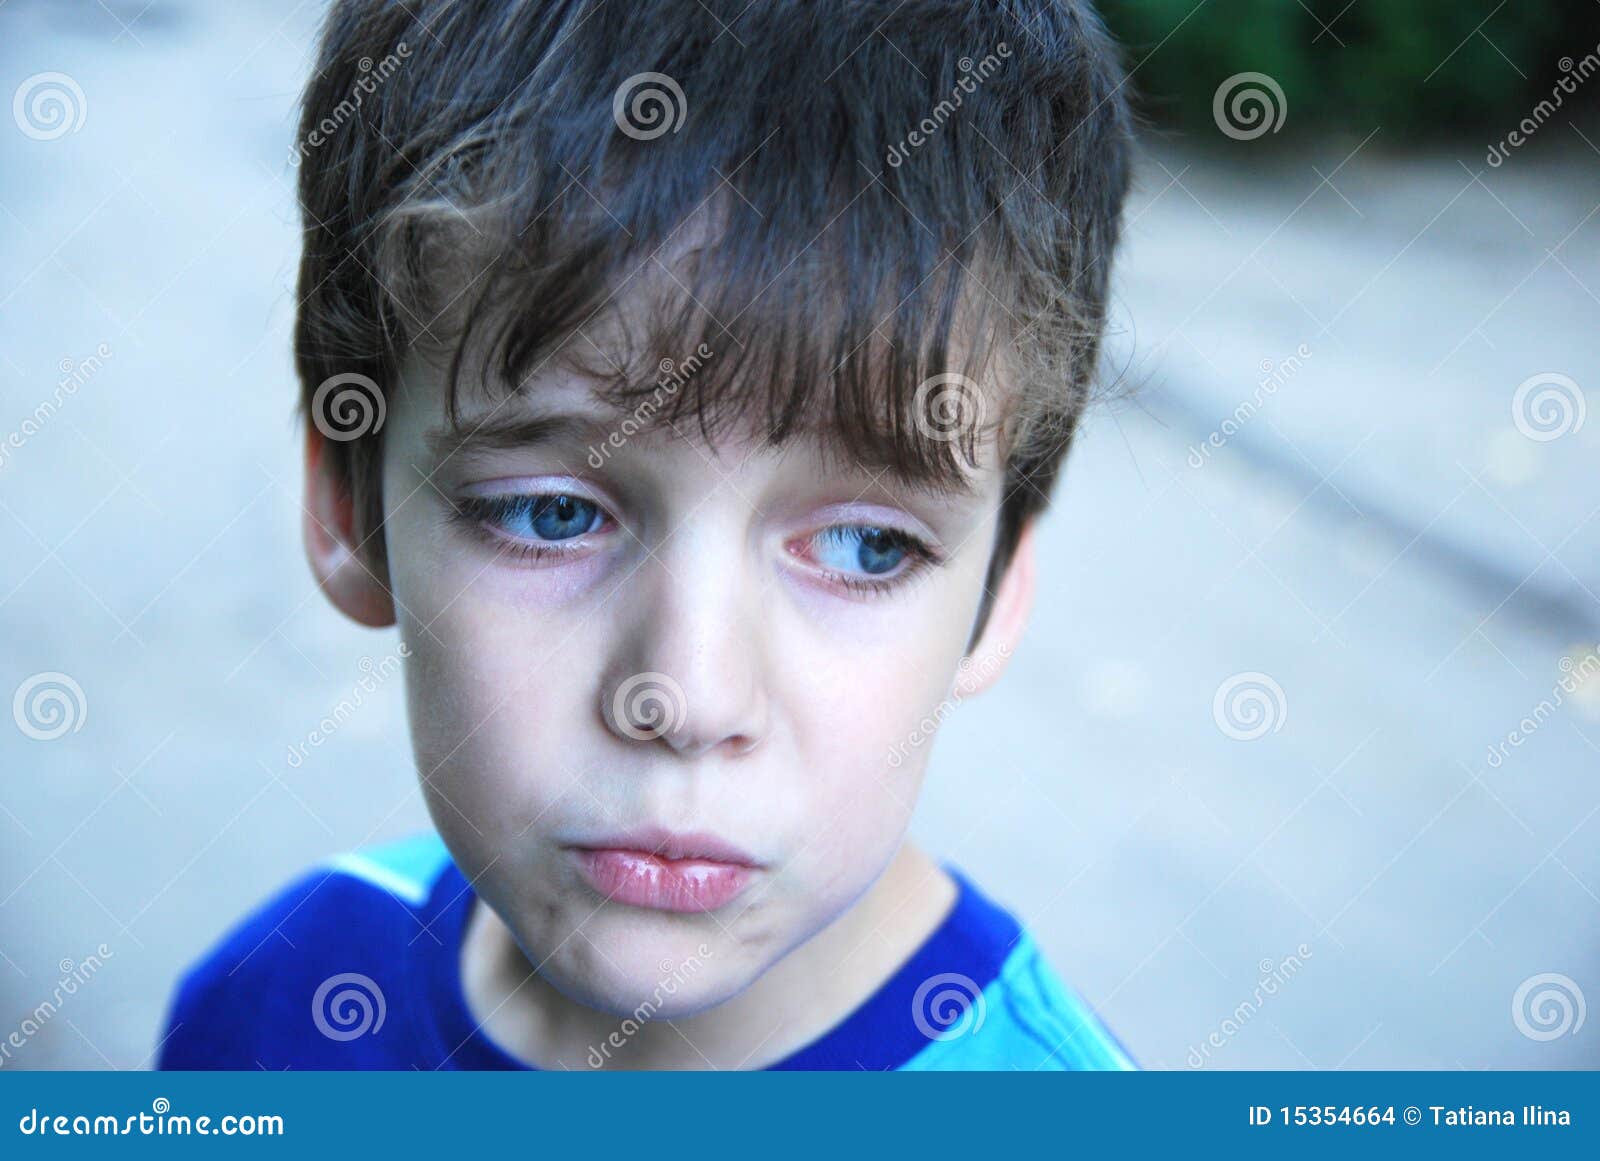 Sad 7 Years Old Boy Portrait. Stock Photo - Image of child, portrait ...